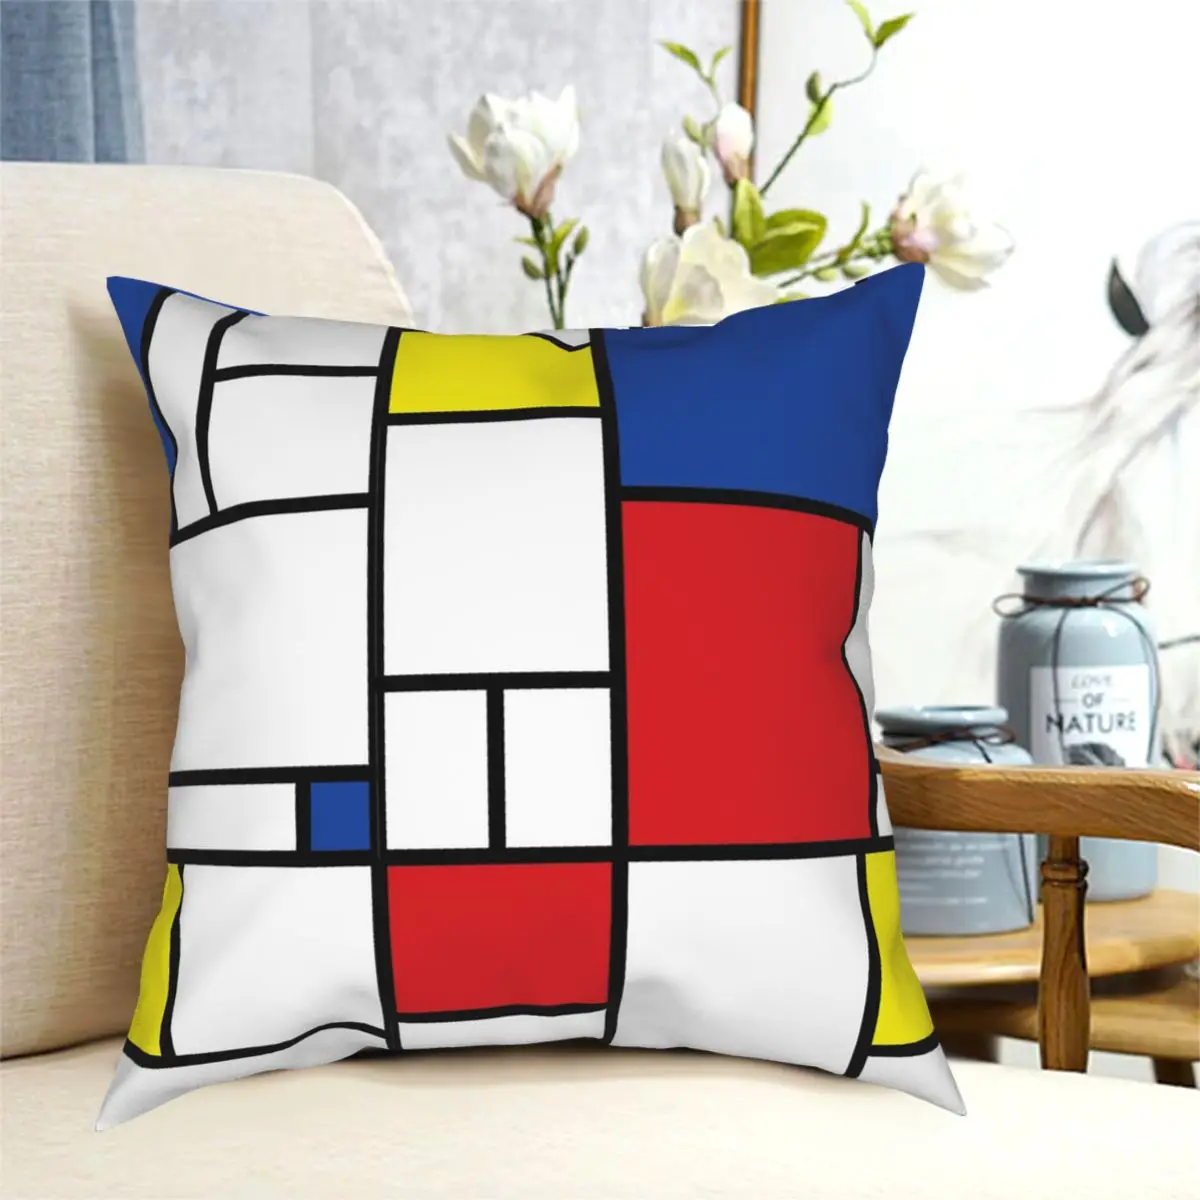 

Mondrian Minimalist De Stijl Square Pillowcase Polyester Creative Zipper Decor Pillow Case Home Cushion Cover 45*45cm